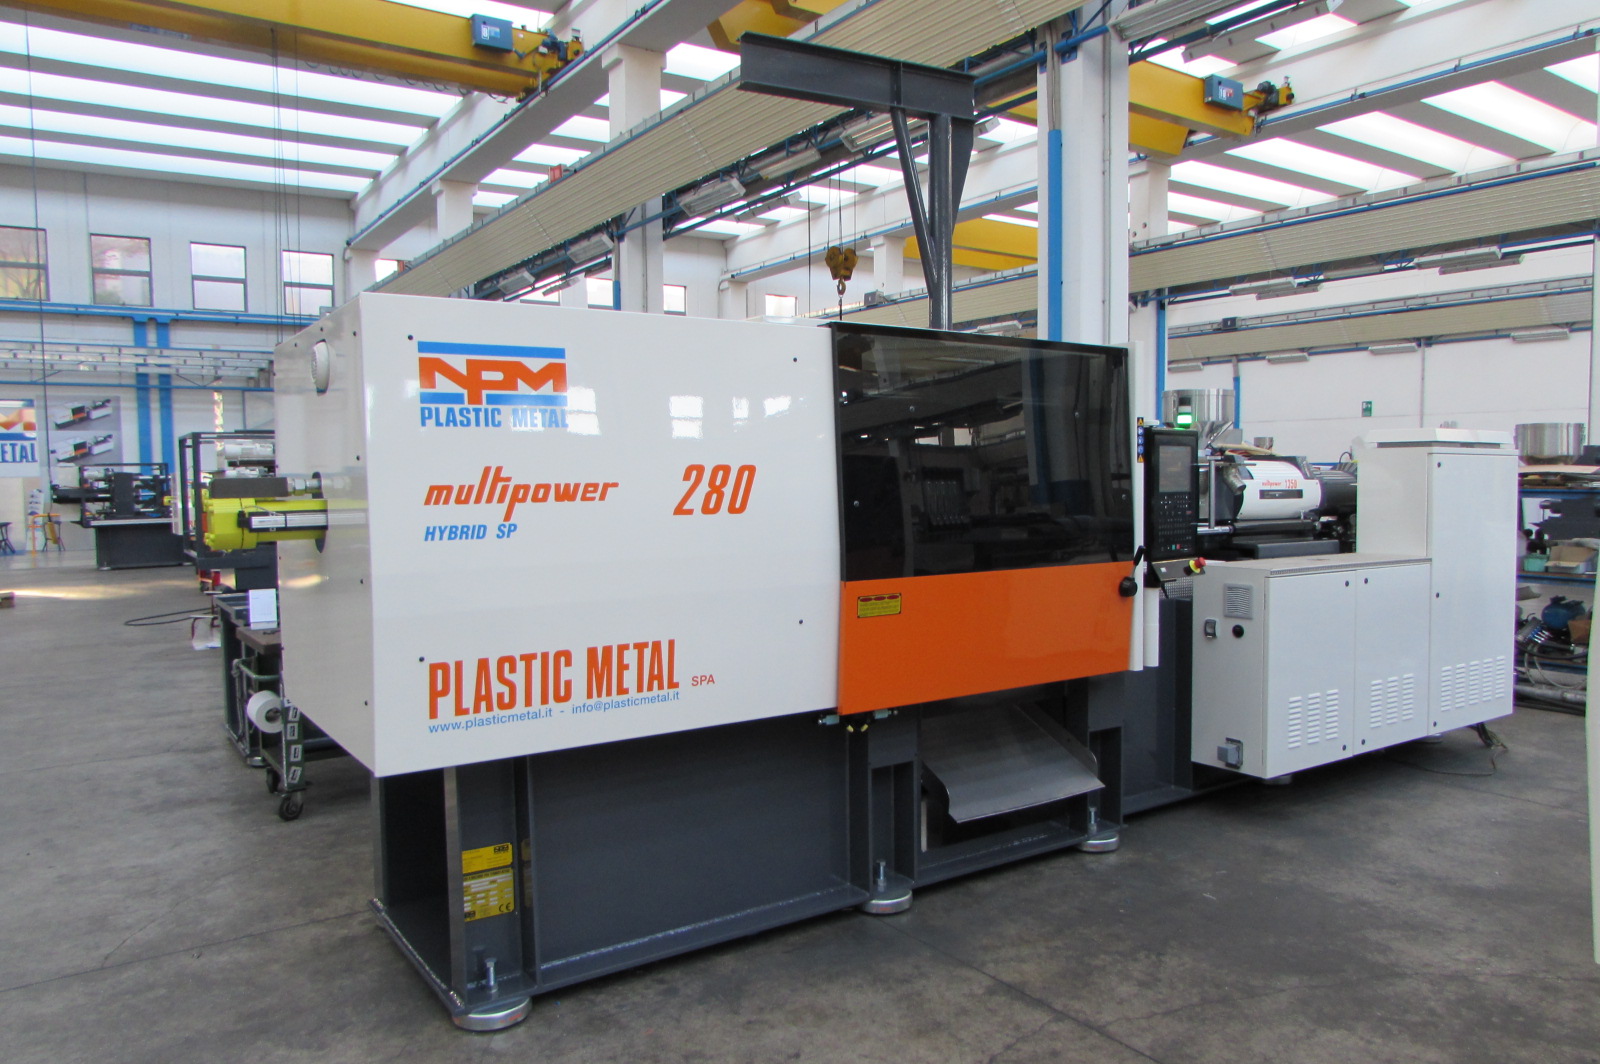 Plastic-Metal-Multipower-SP-Hybrid-280